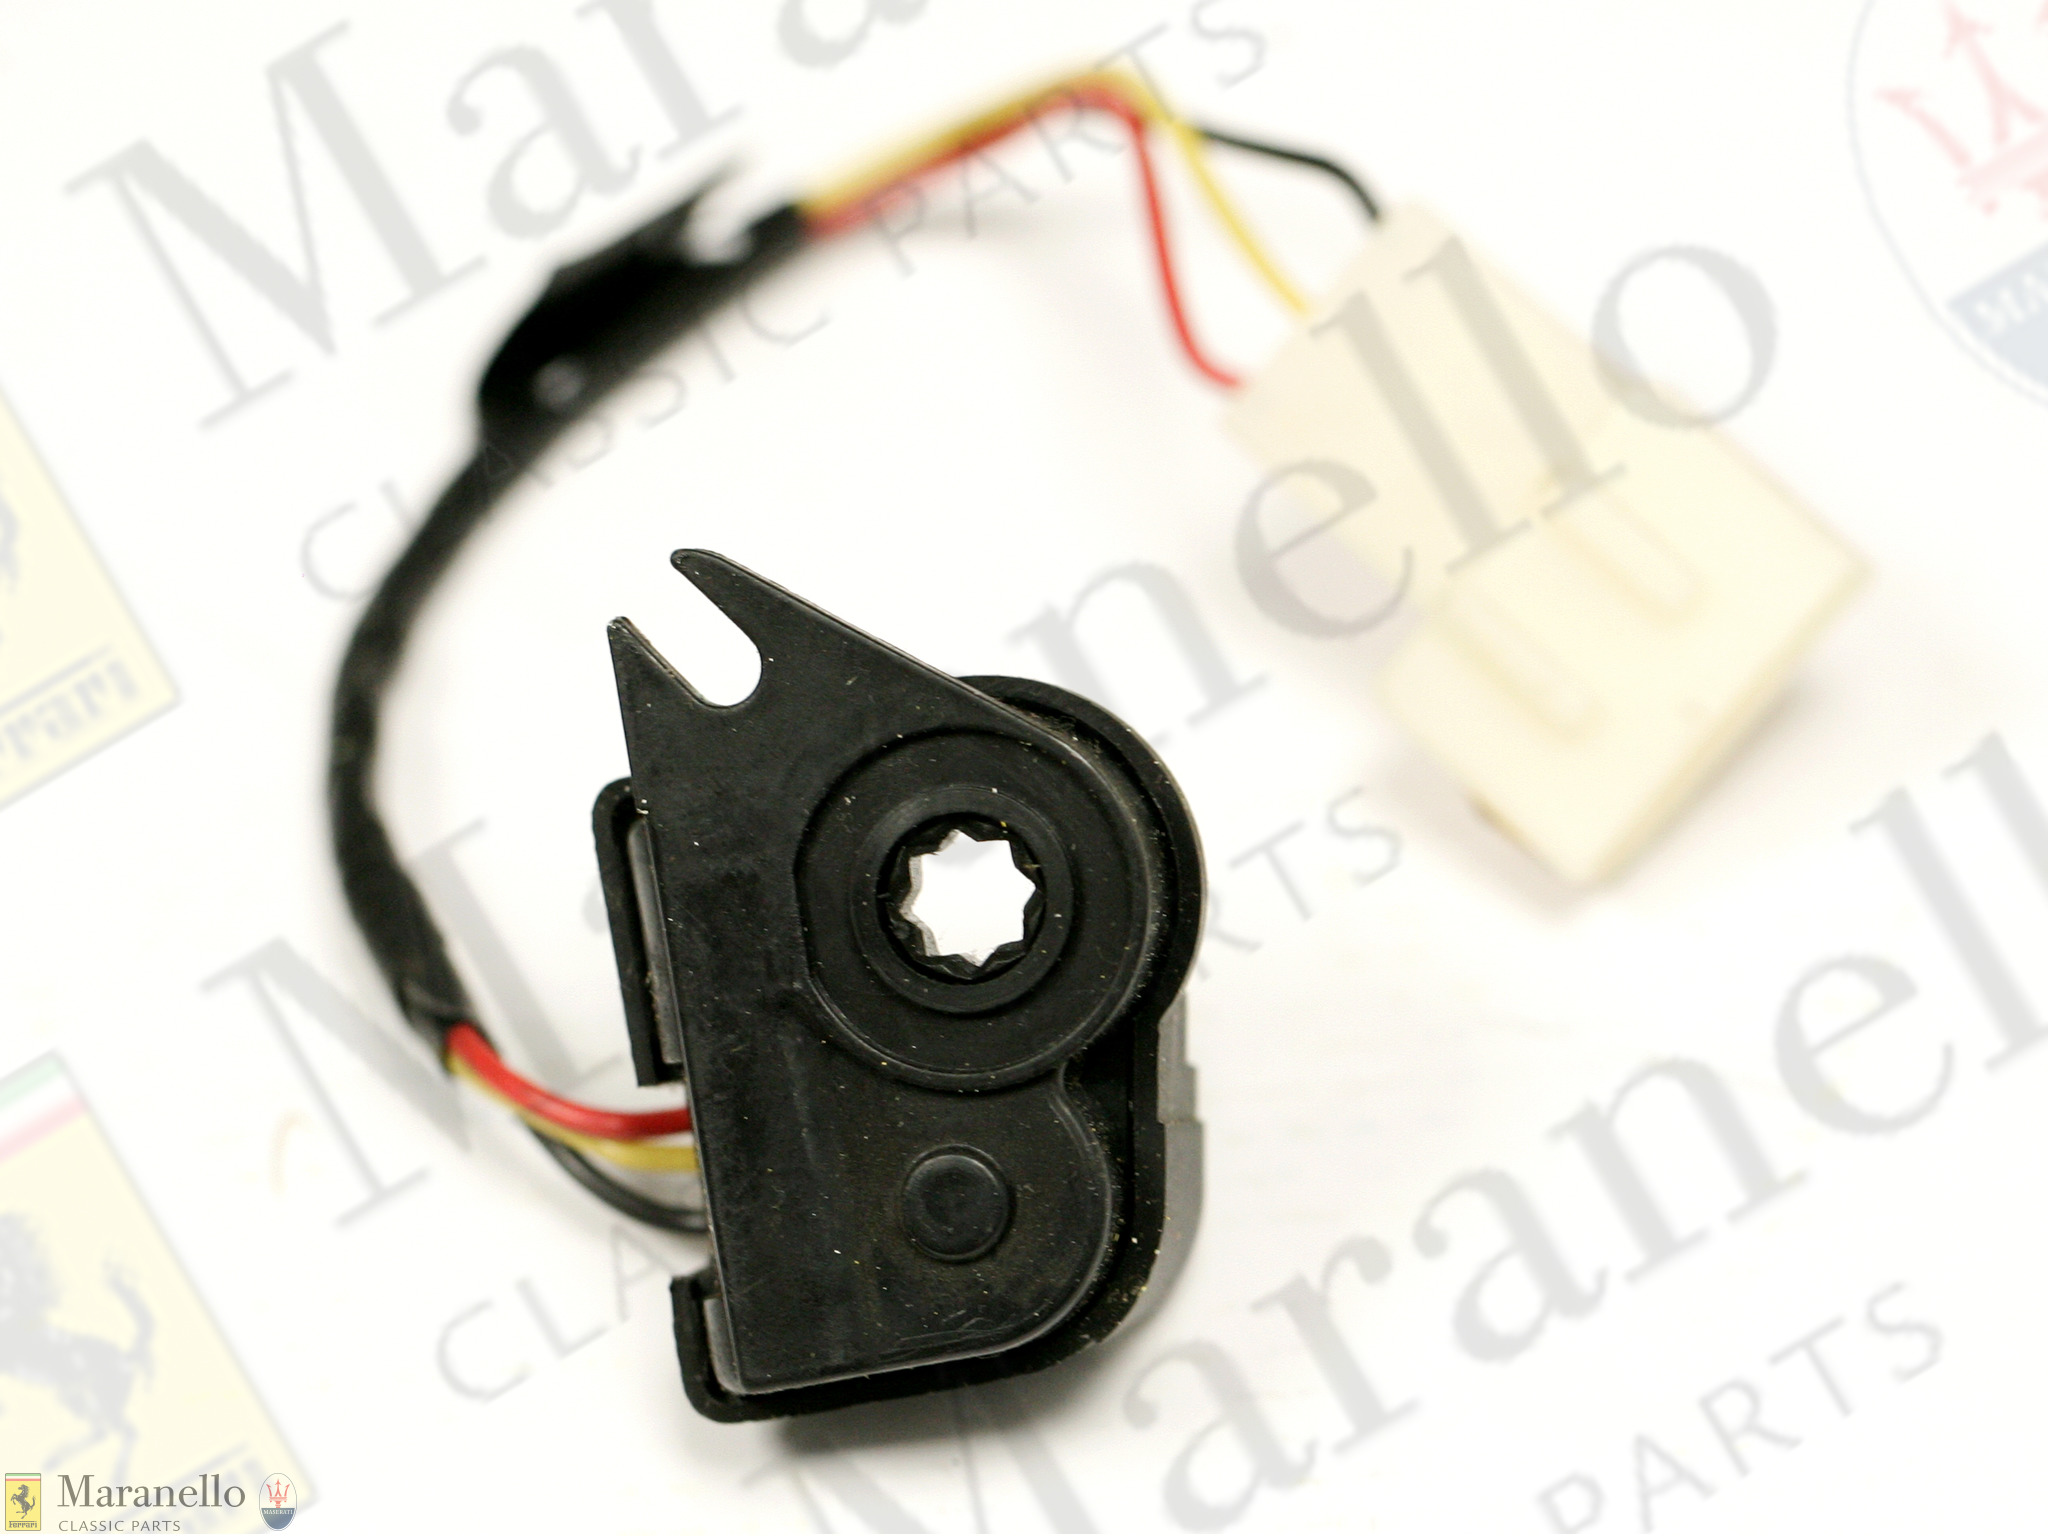 Ferrari part 64978300 - Seat Potentiometer Only | Maranello 